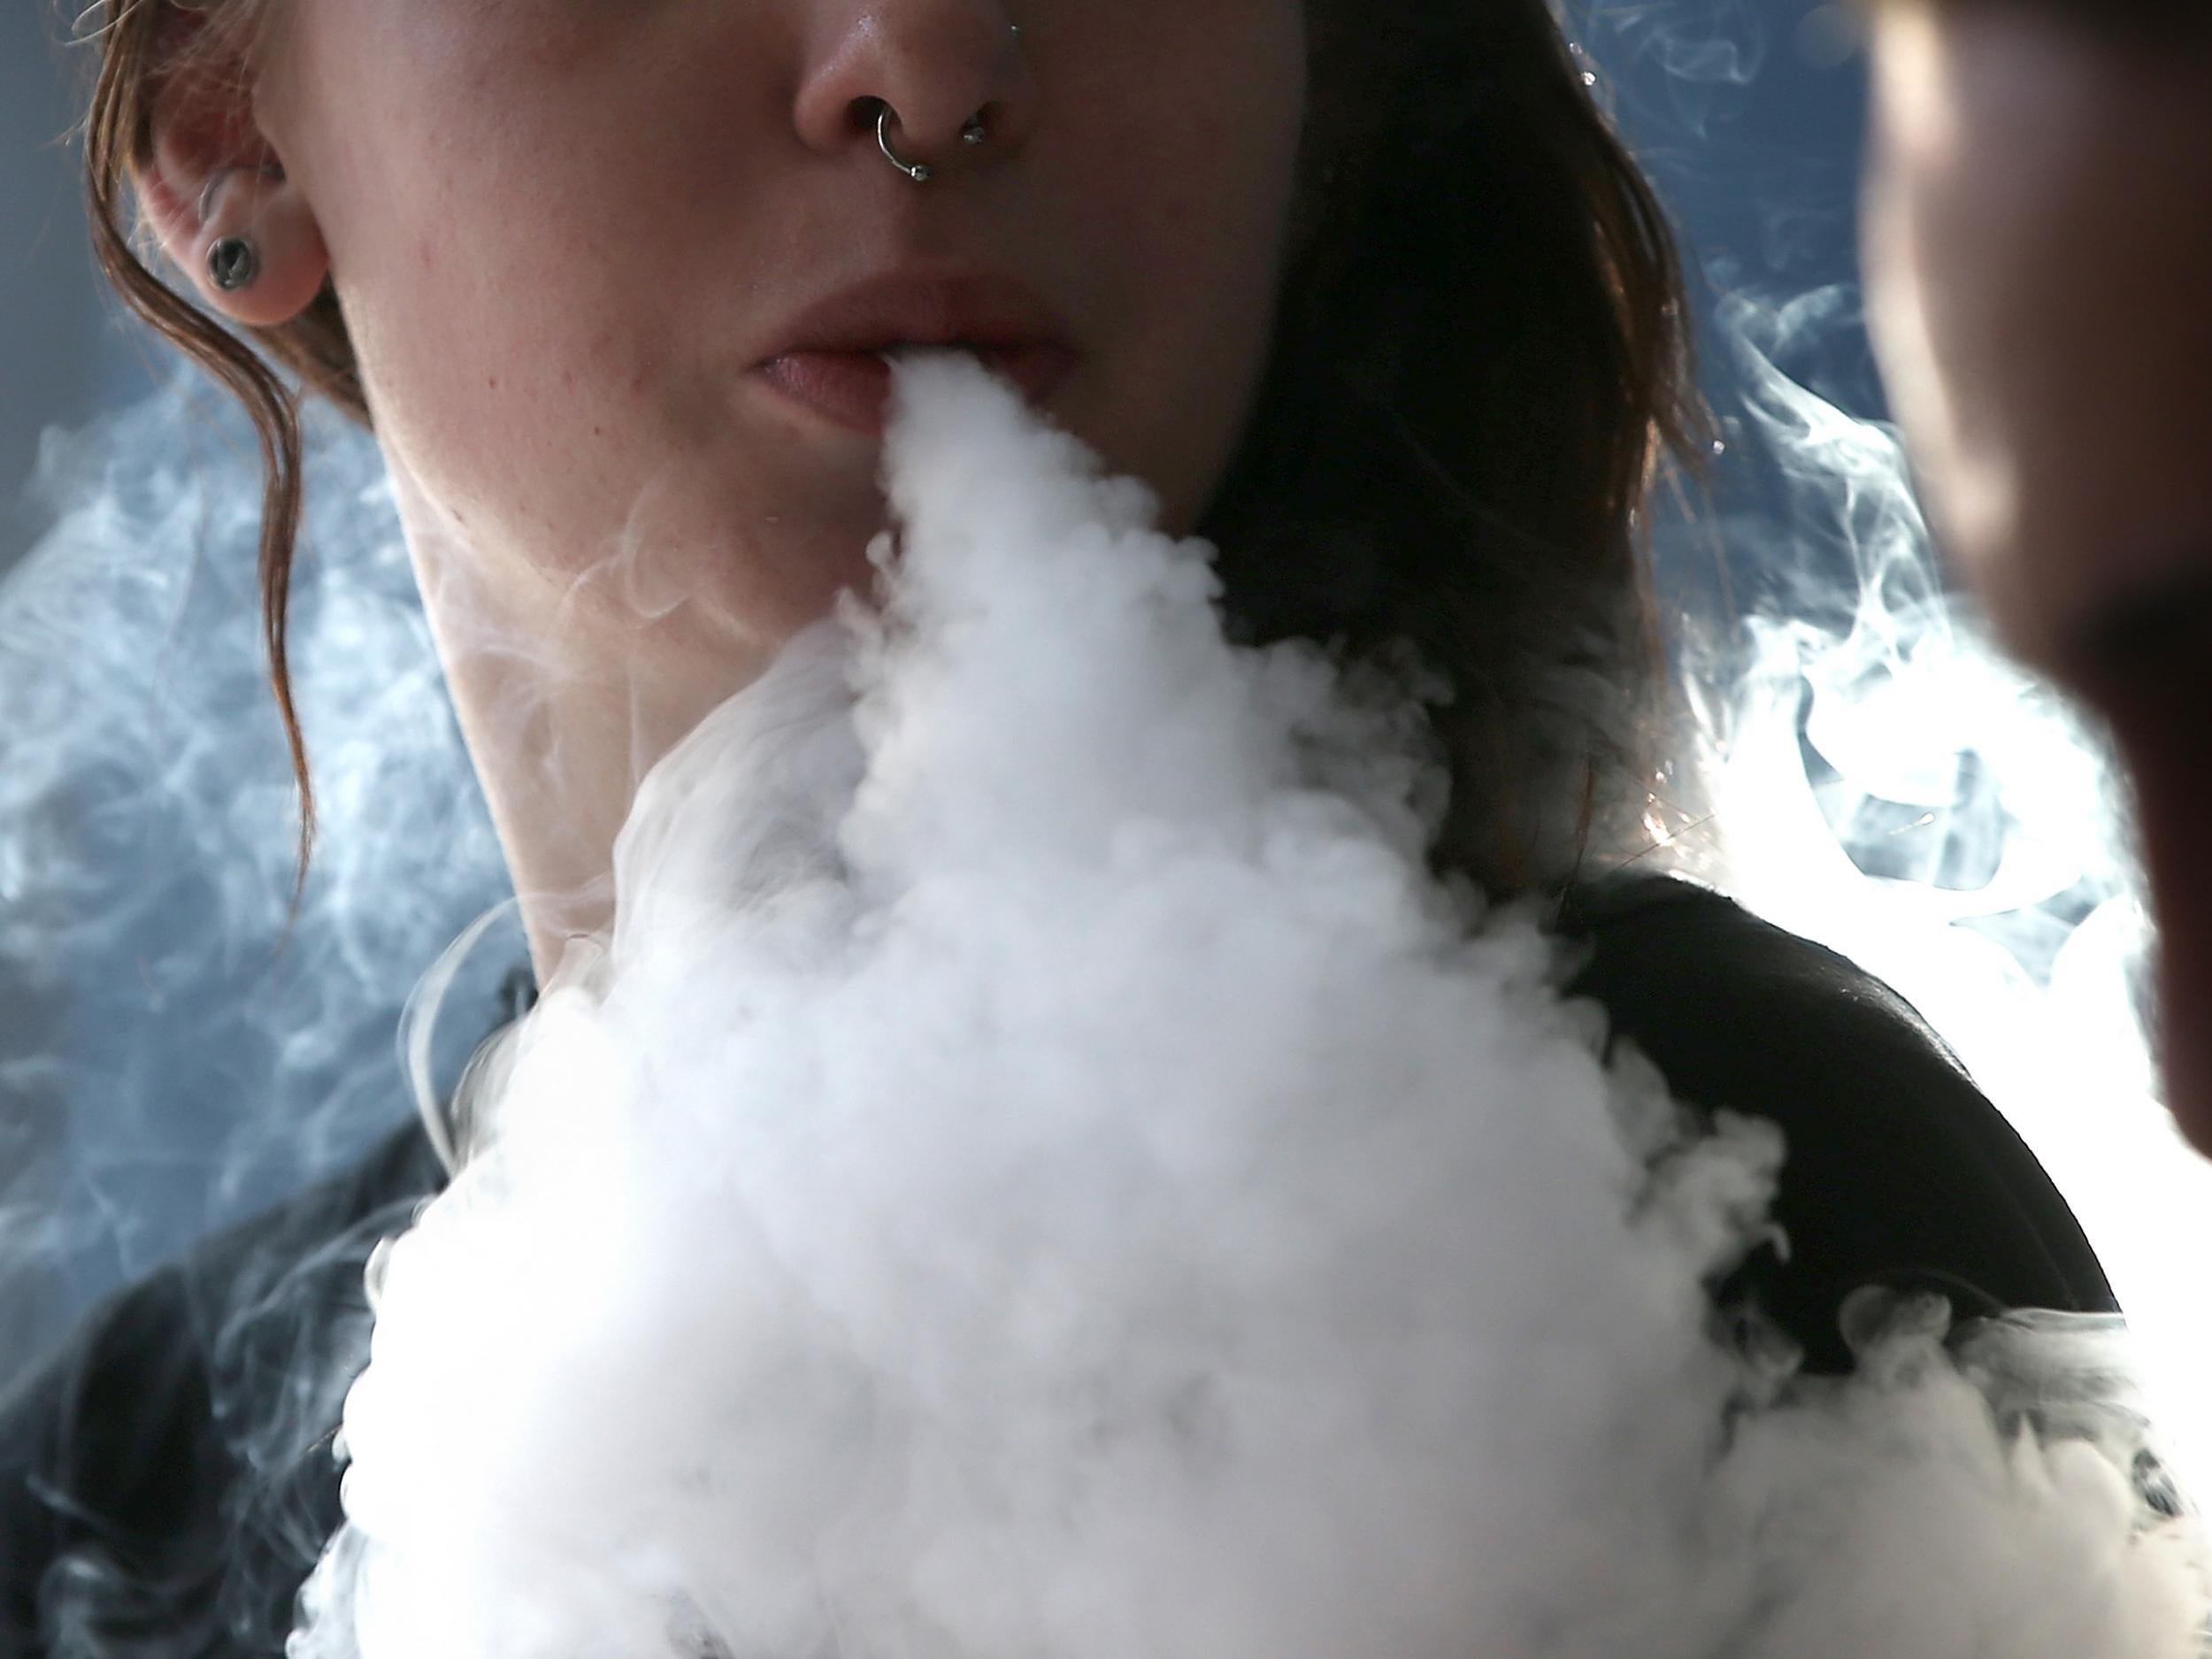 An estimated 2.1 million Britons use e-cigarettes